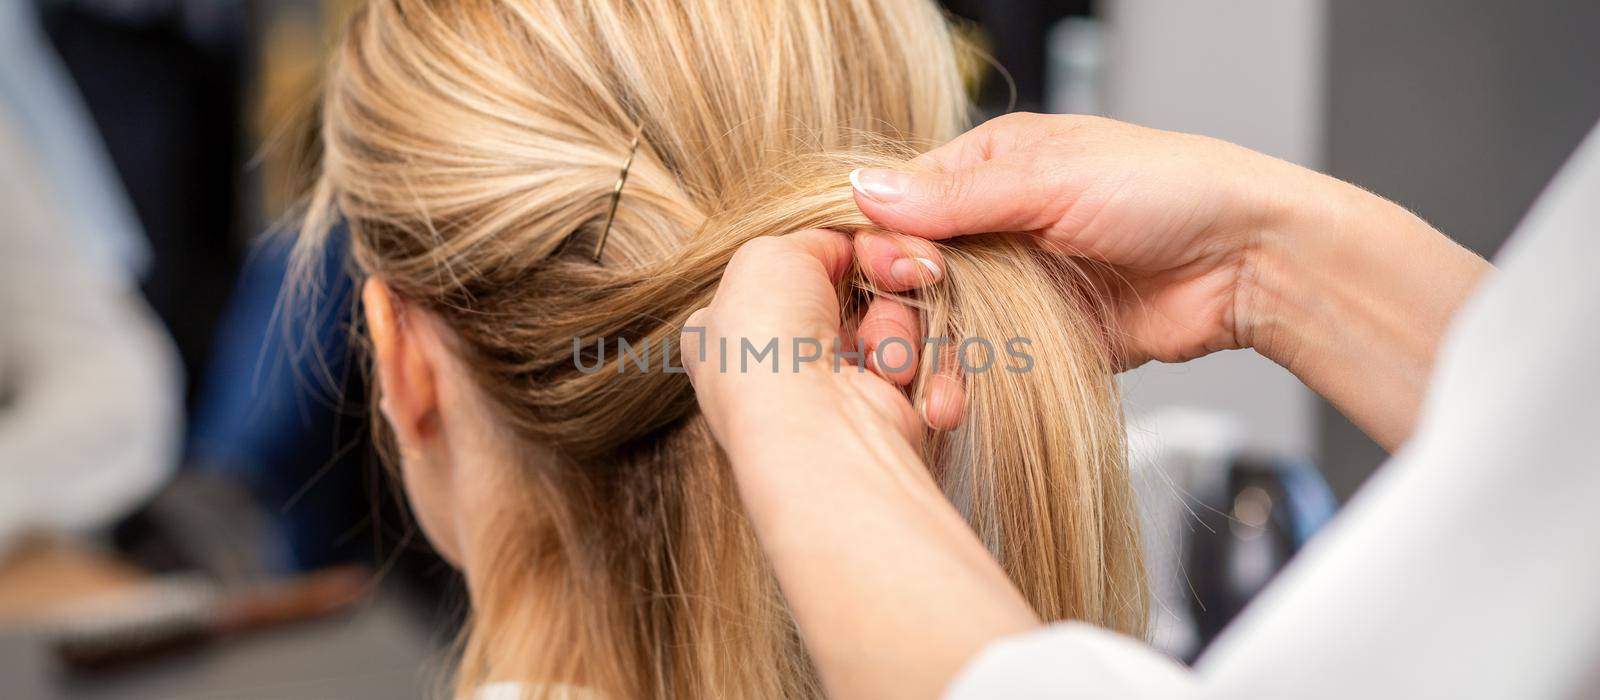 Hairdresser's hands braiding client's hair by okskukuruza